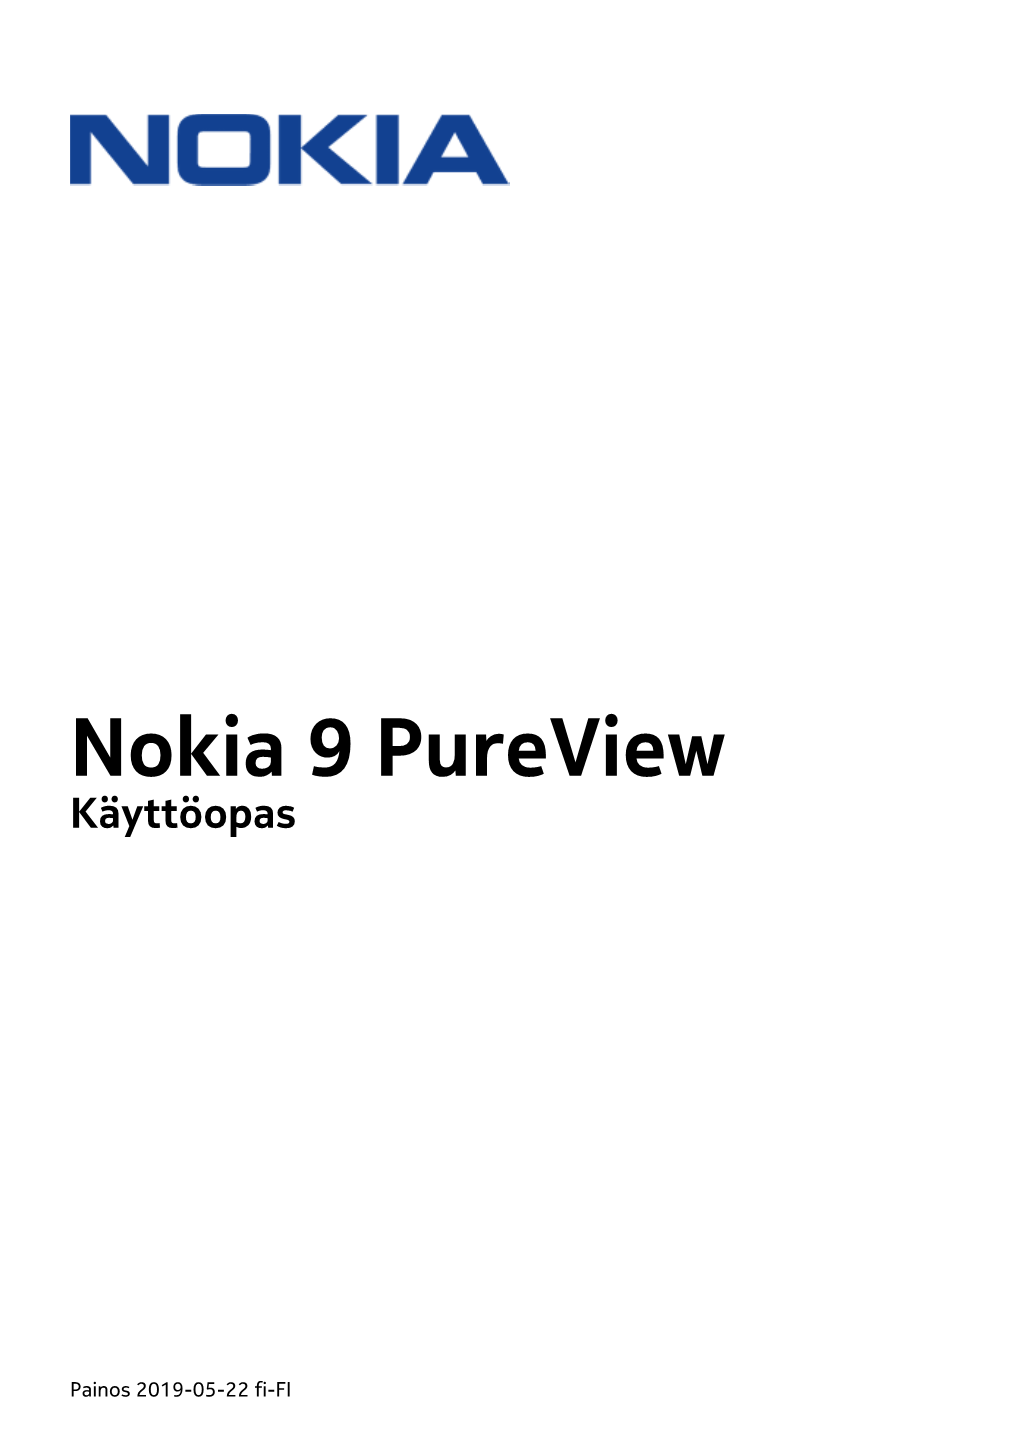 Nokia 9 Pureview Käyttöopas